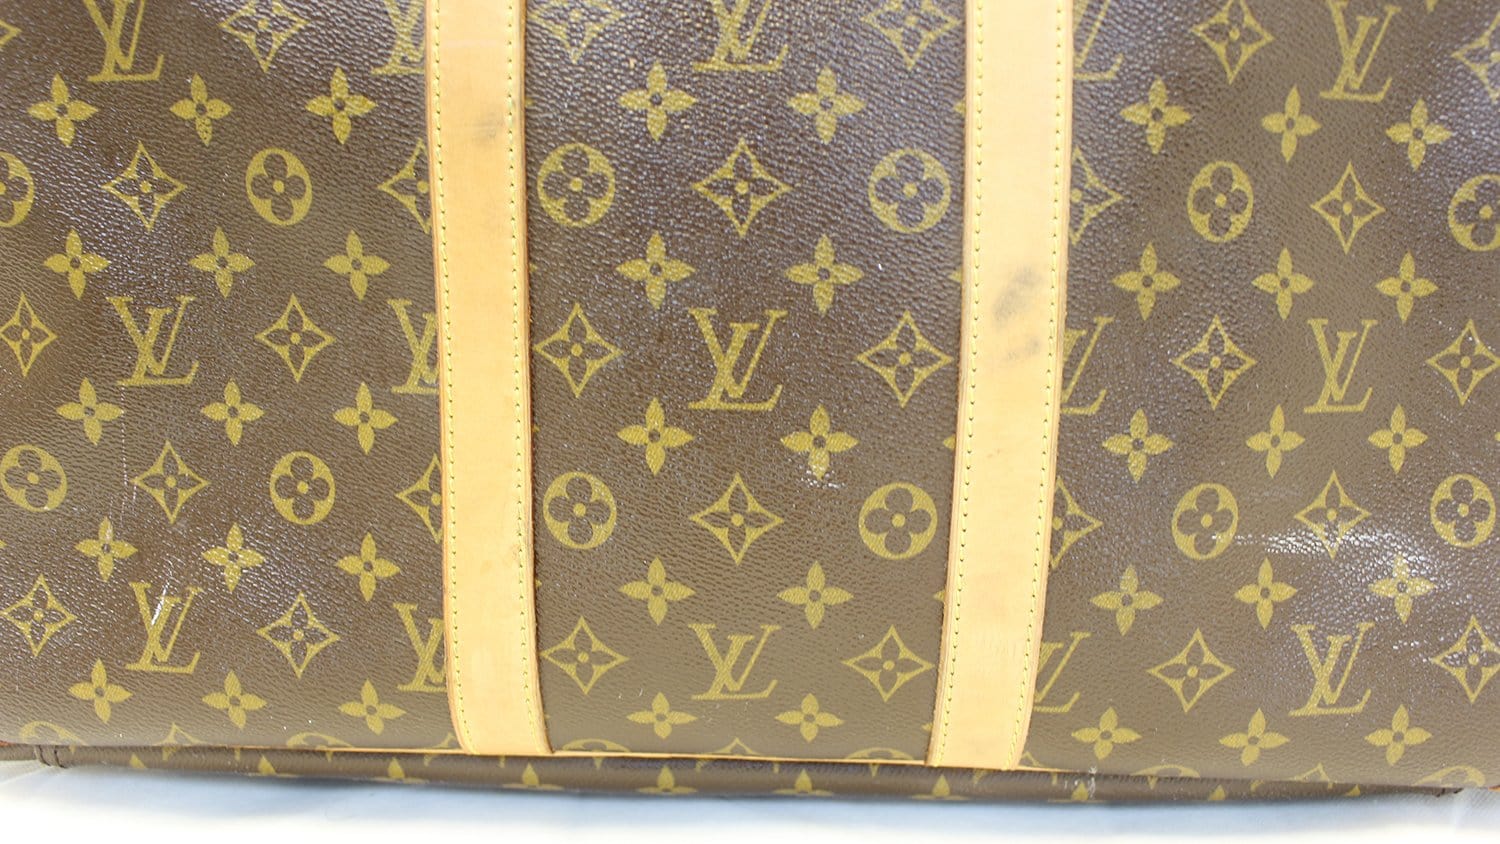 Louis Vuitton Sirius Travel bag 393444